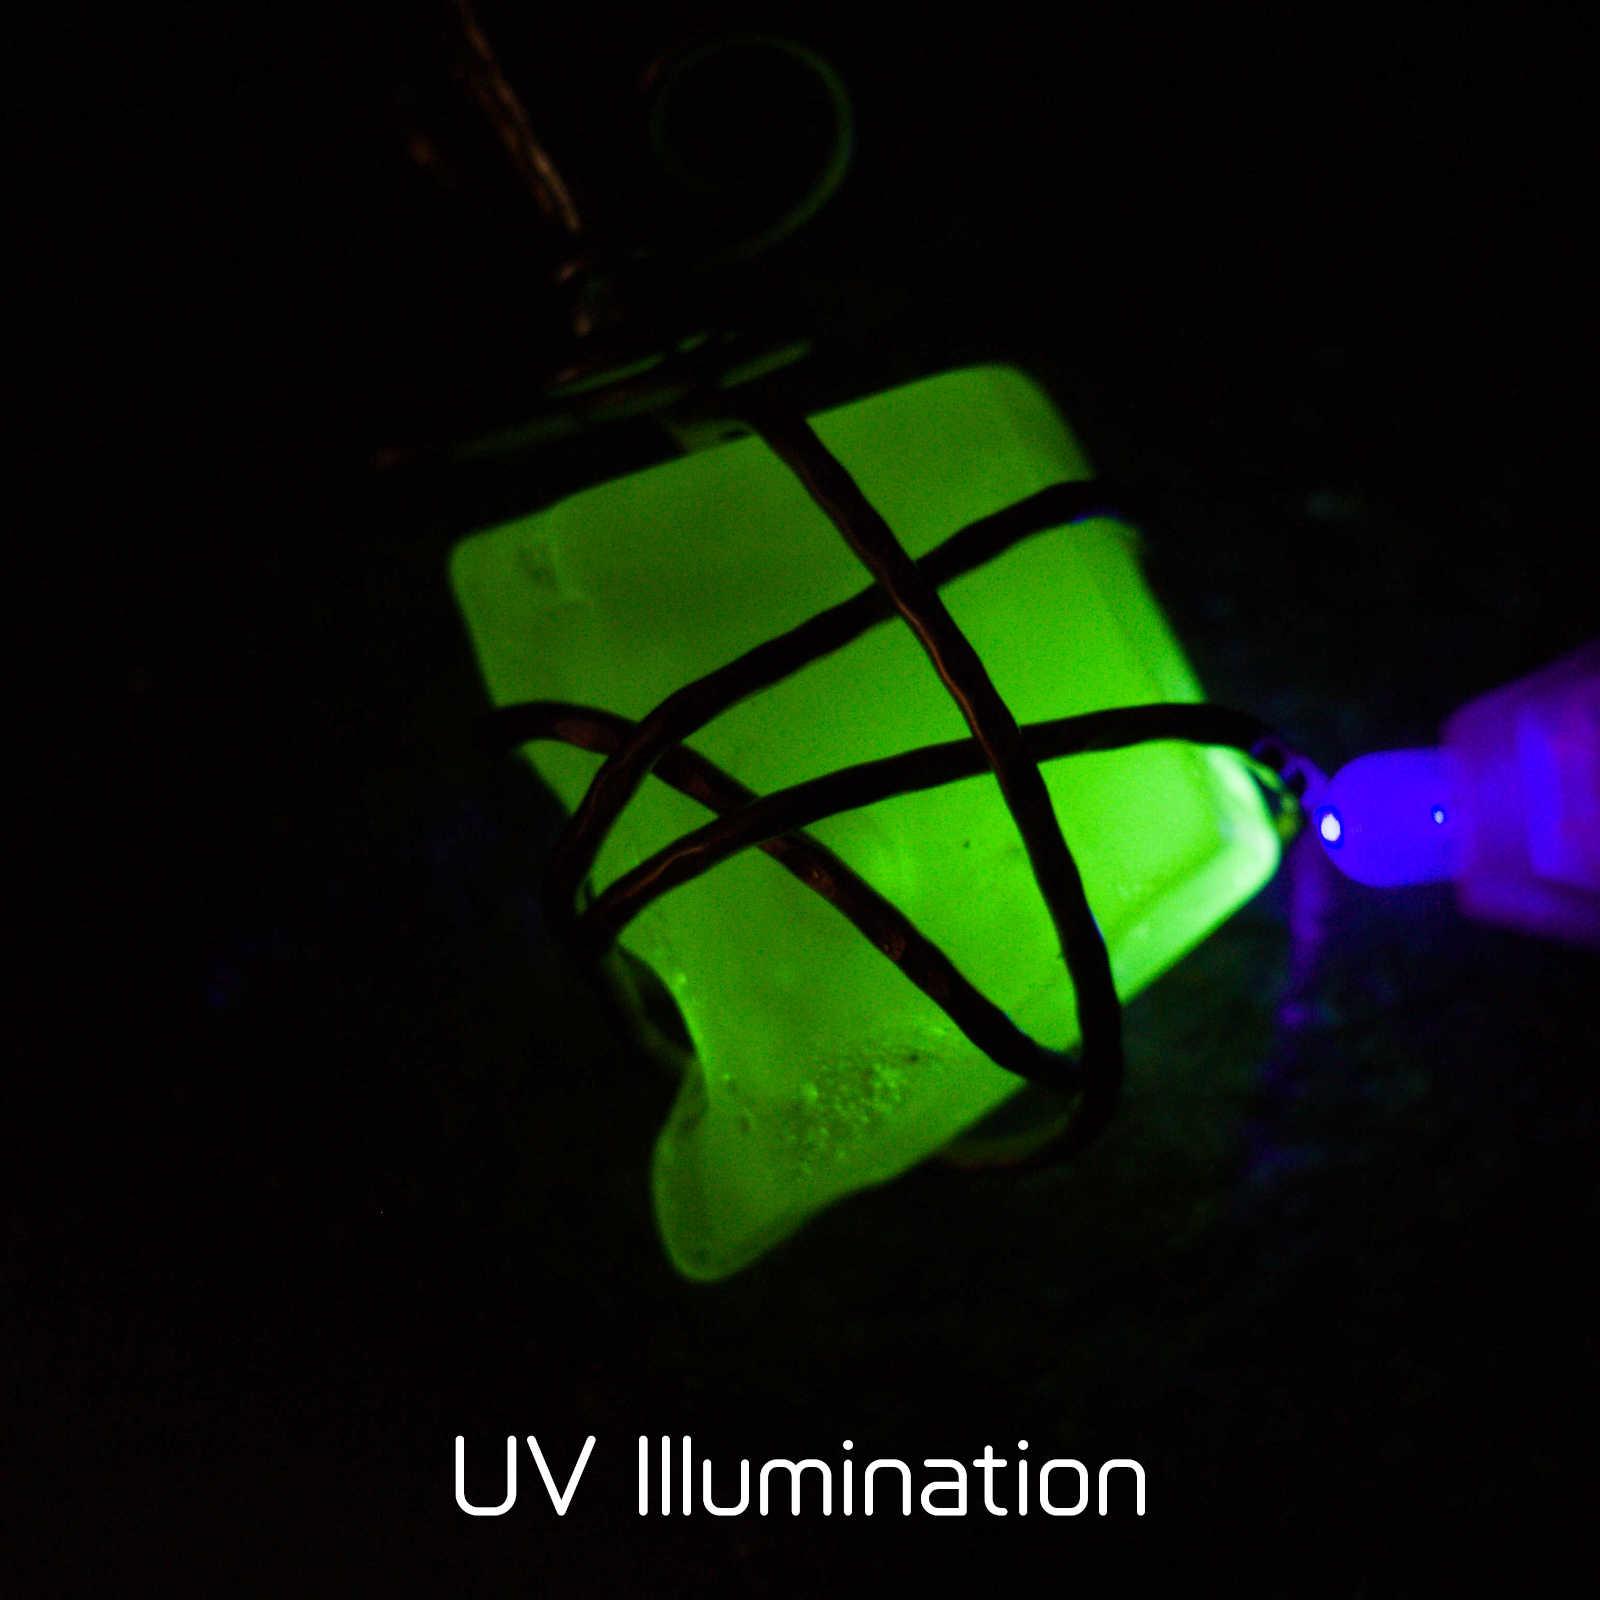 Uranium glass accessory under UV light